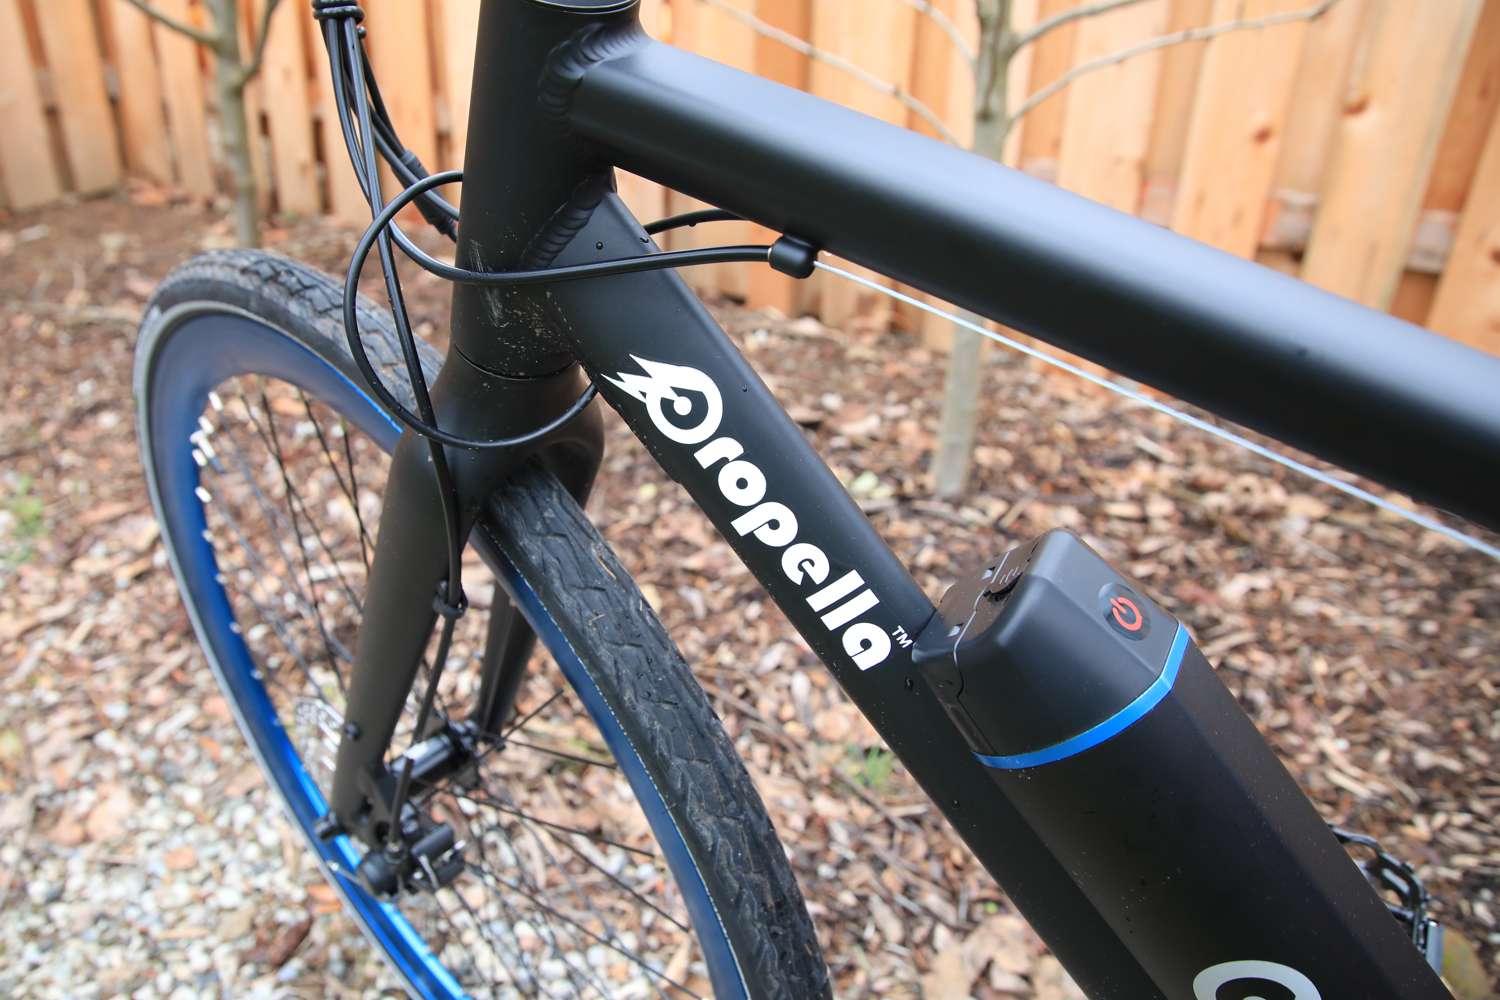 Bicicleta Propella 7S 4.0 com bateria estilo garrafa de água